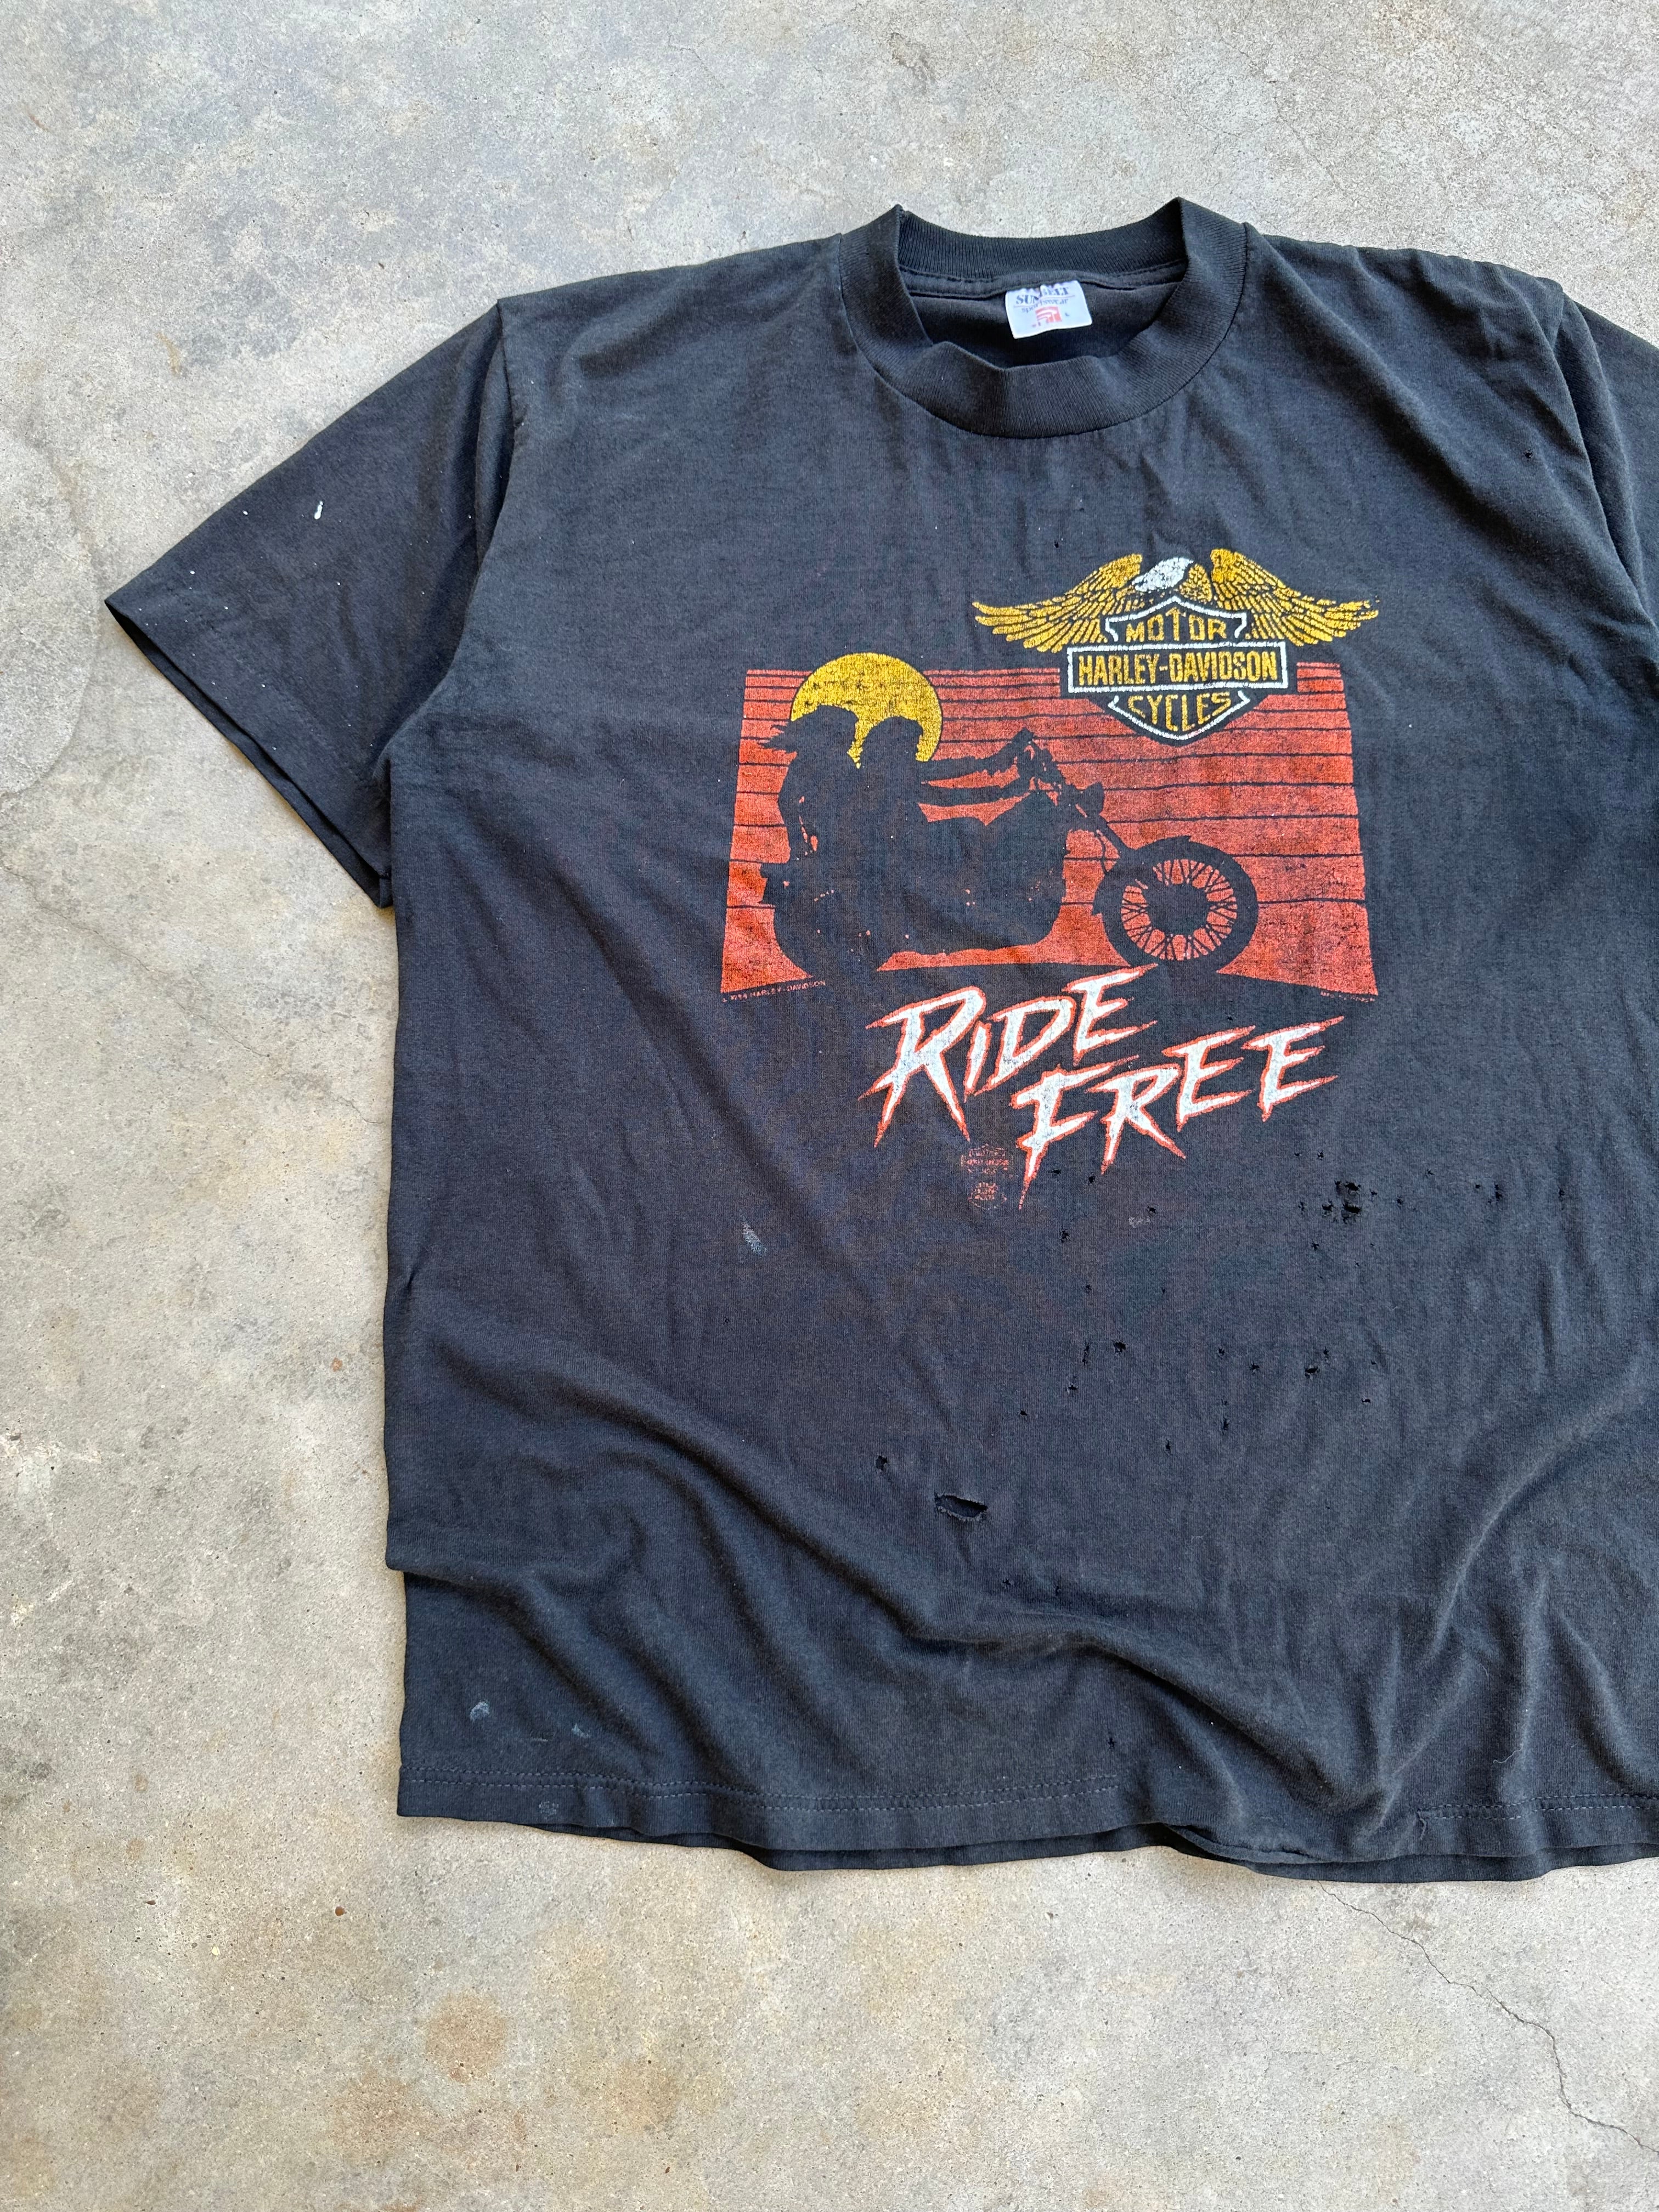 1980s Thrashed Harley Davidson Ride Free T-Shirt (M)